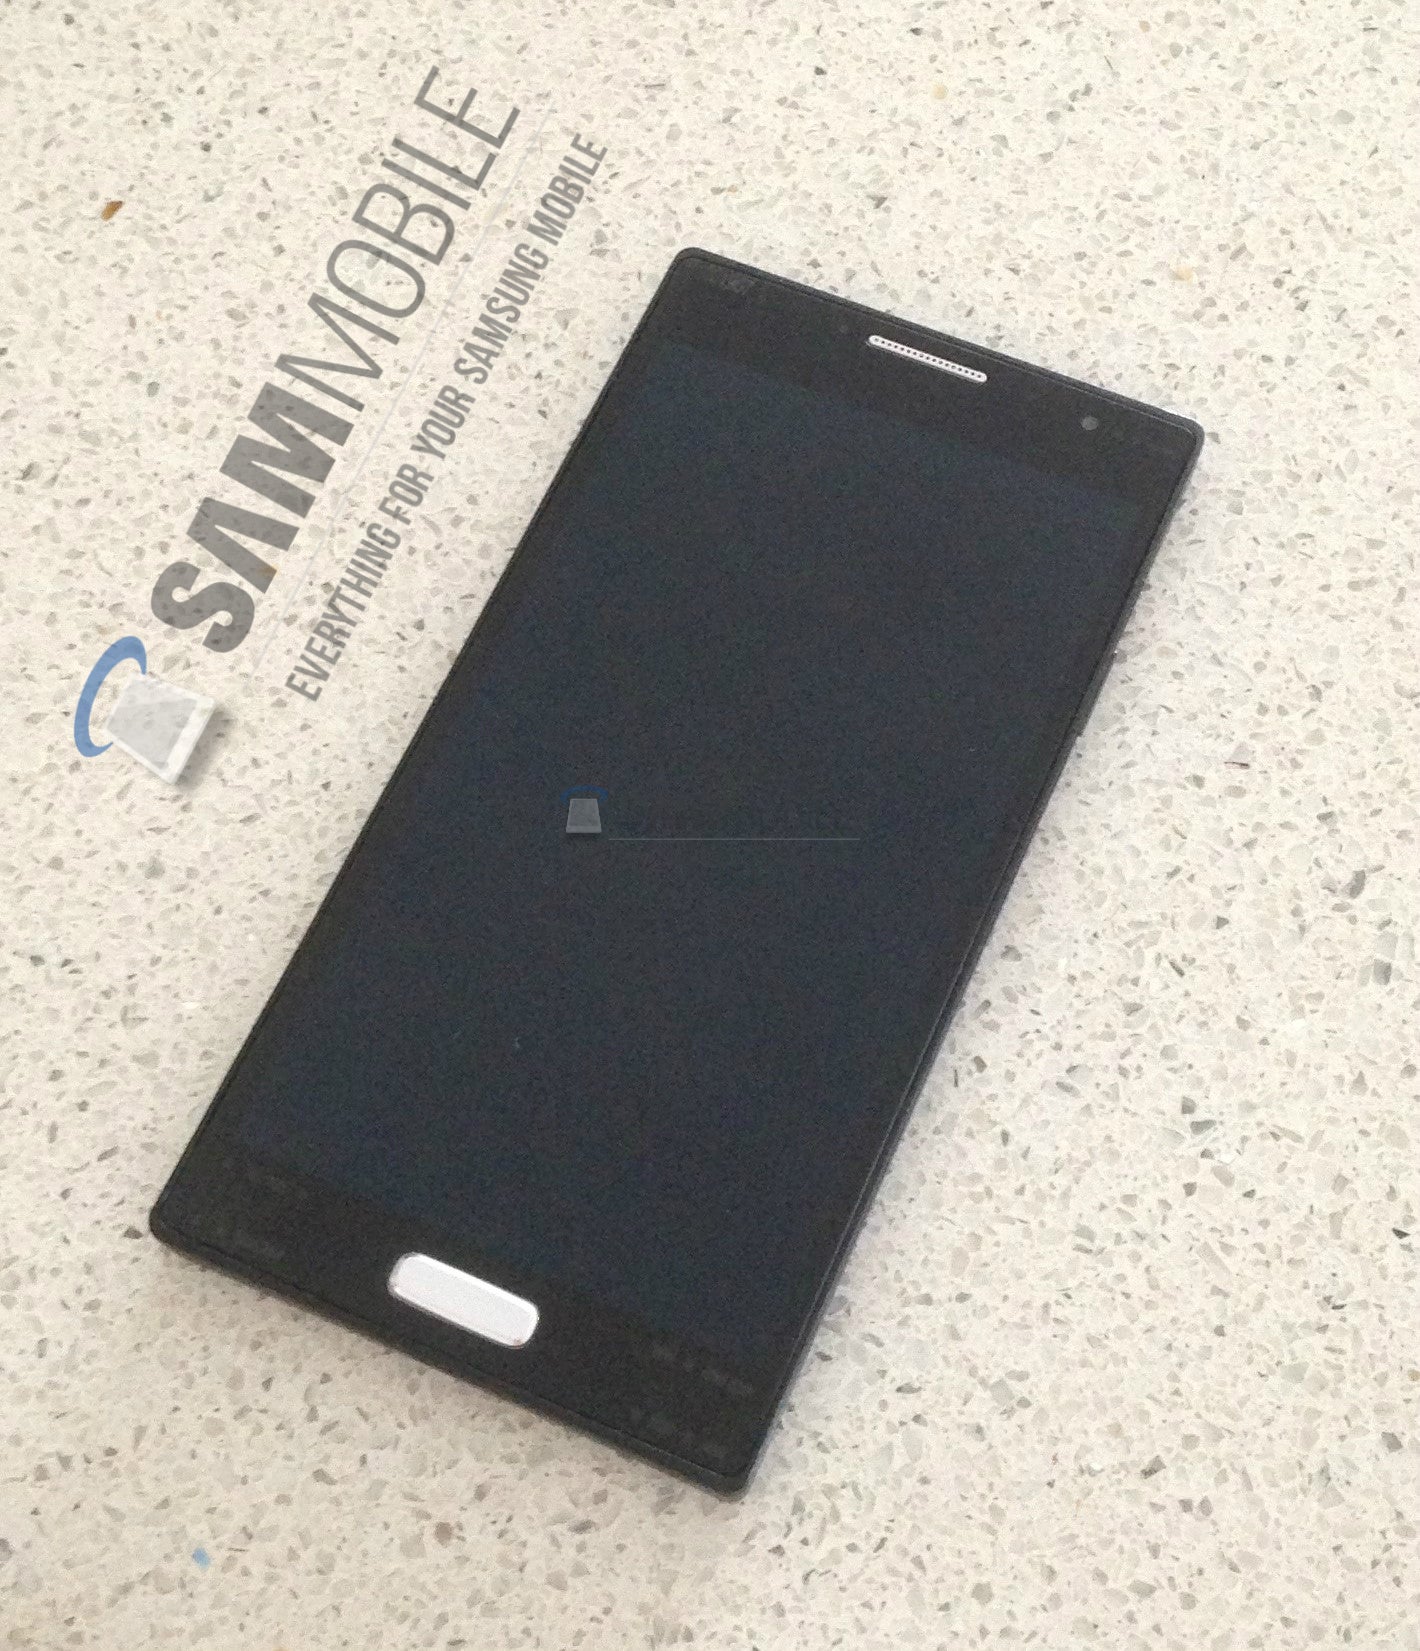 Mystery Samsung device identified, it isn't the Note III